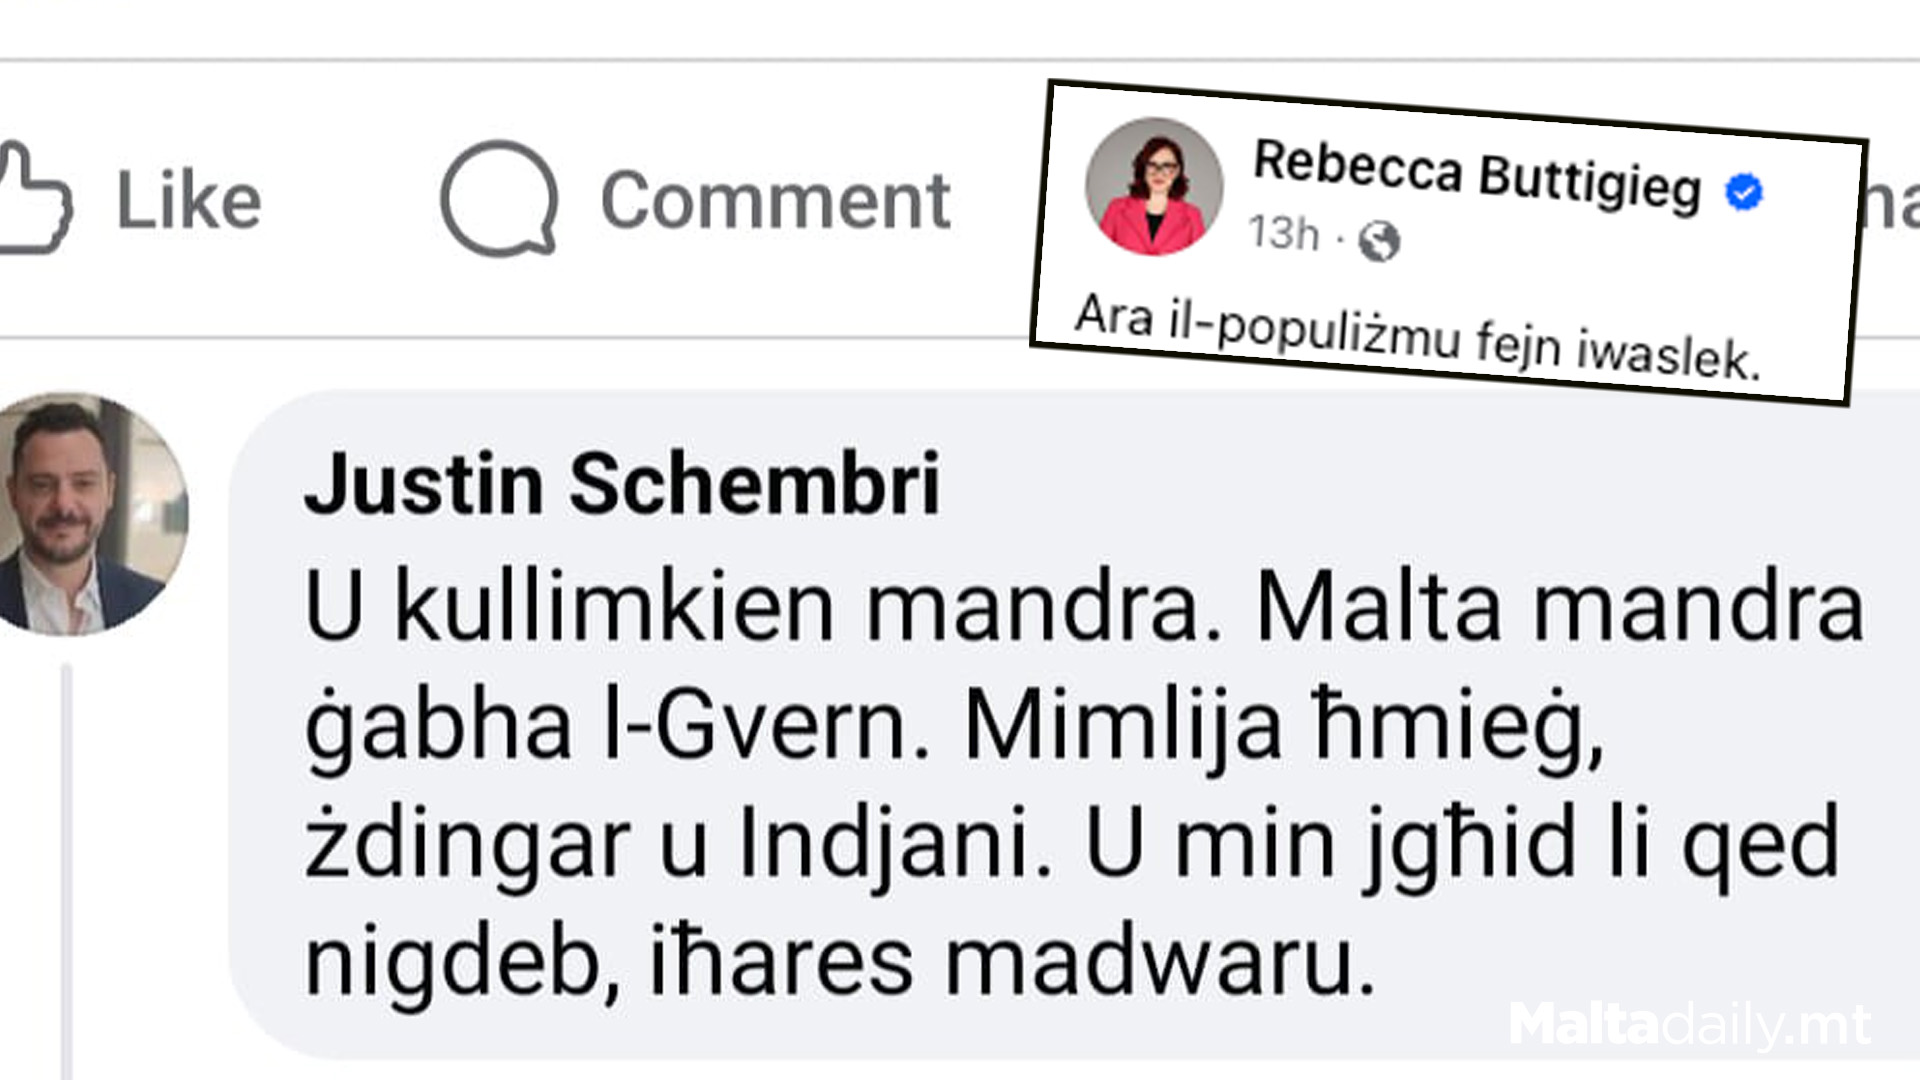 'Ħmieġ U Indjani': PN MP Comment Causes Social Media Stir